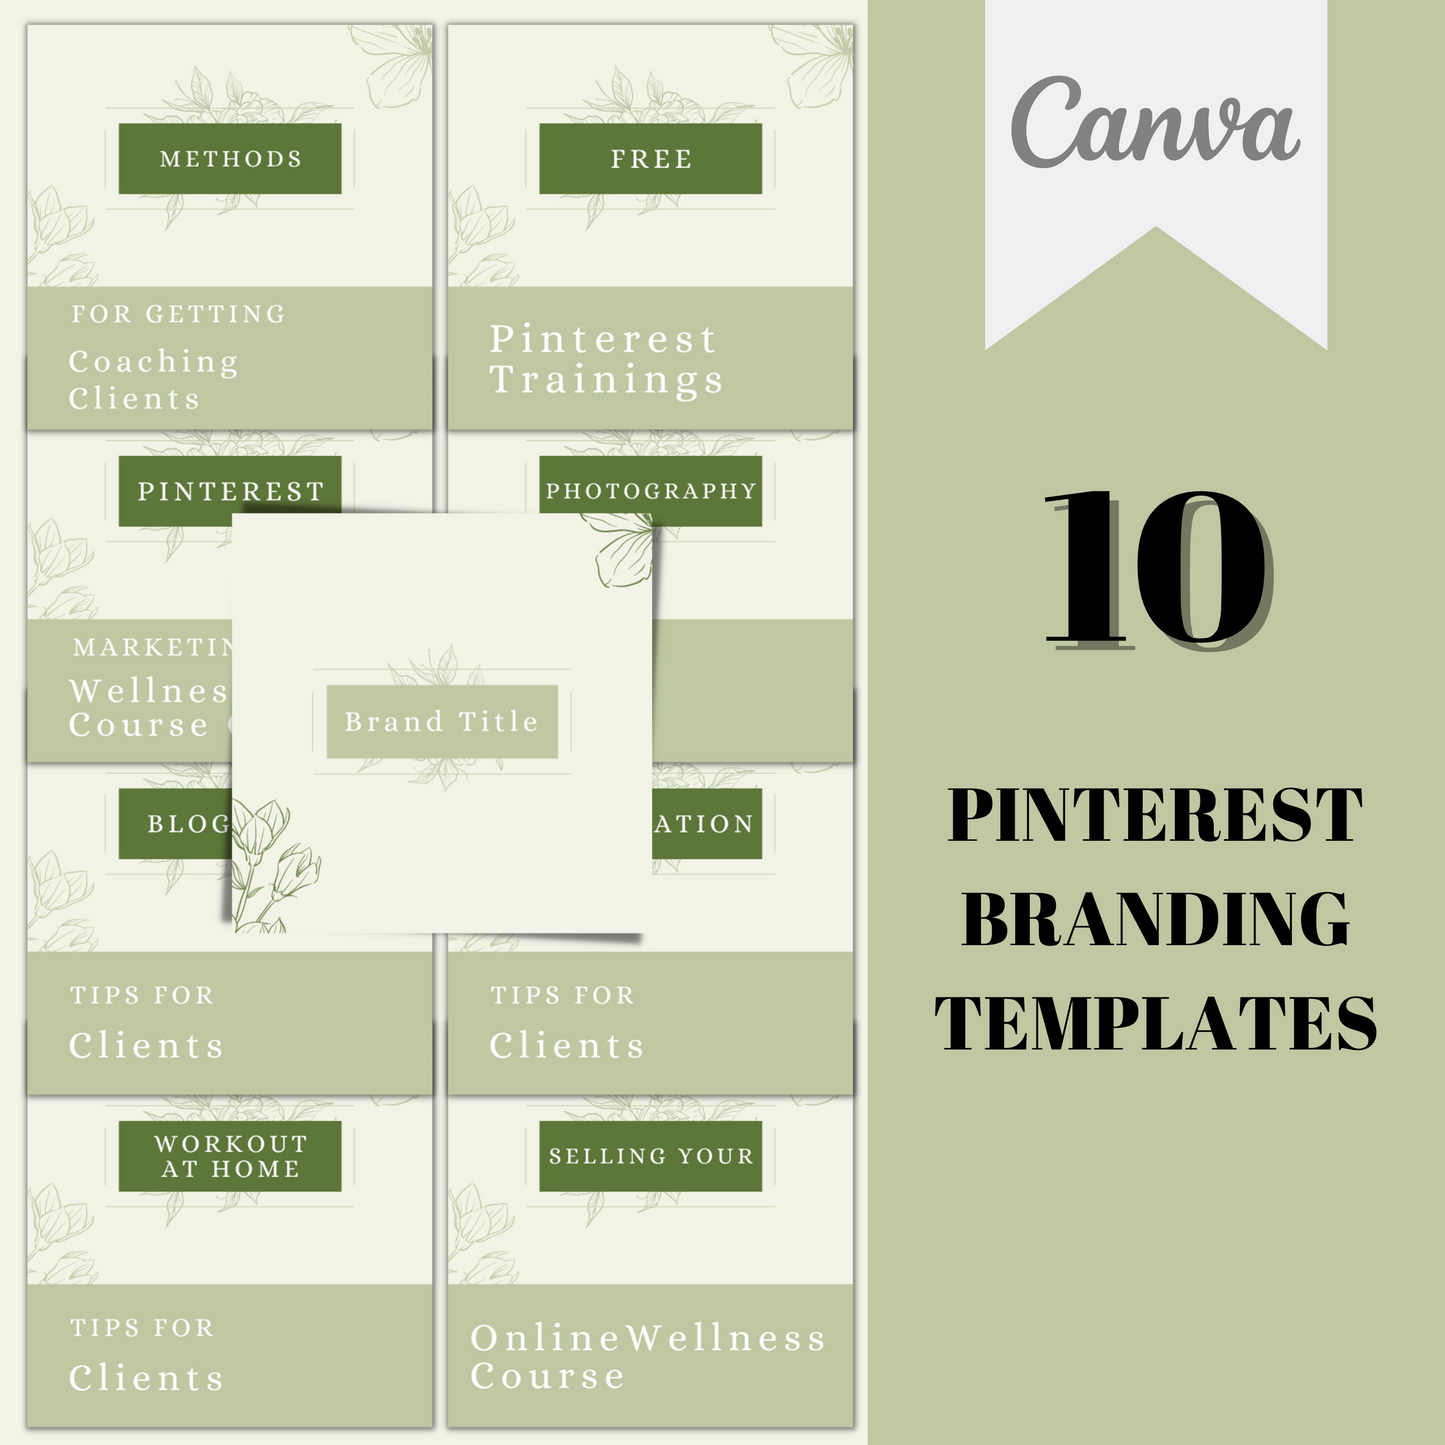 Pinterest board covers canva, online coach, coaching business, online course, pinterest templates, pinterest marketing, pinterest branding